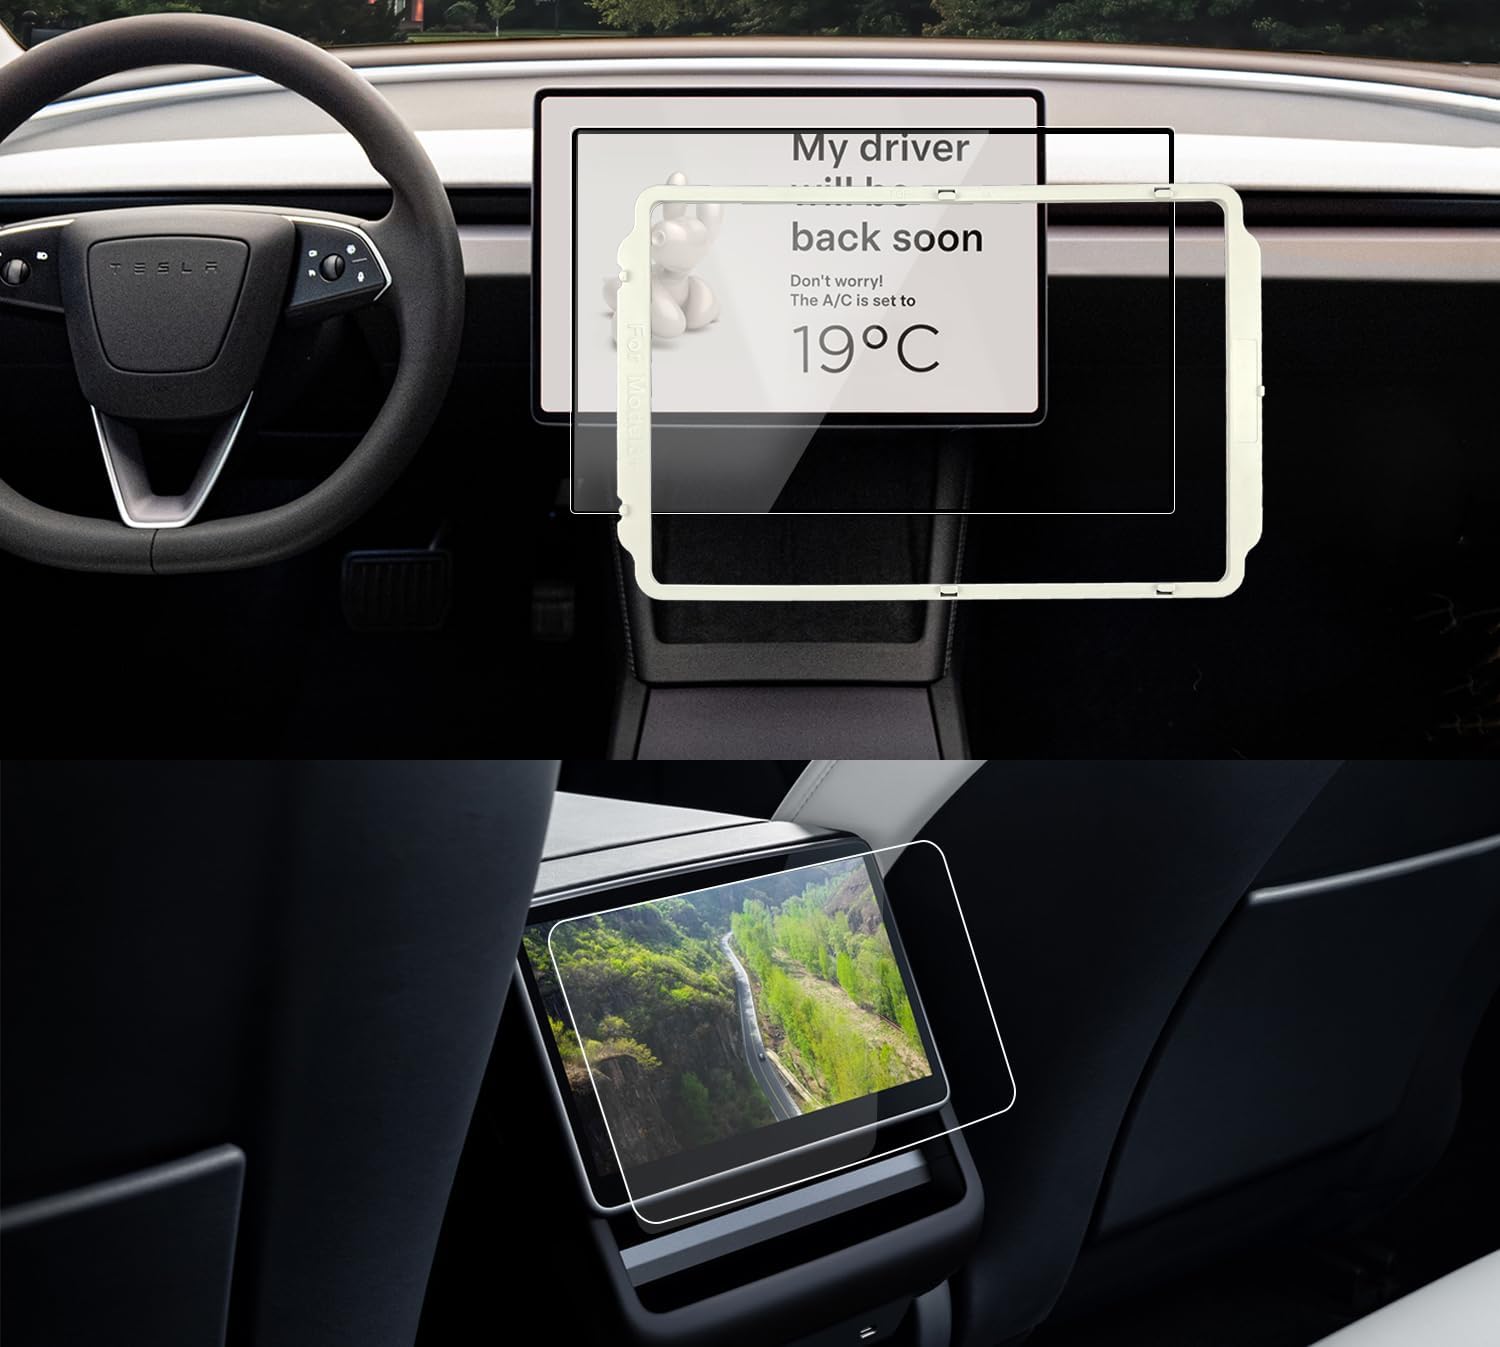 Tesla Model 3 Highland Tempered Glass Screen Protector